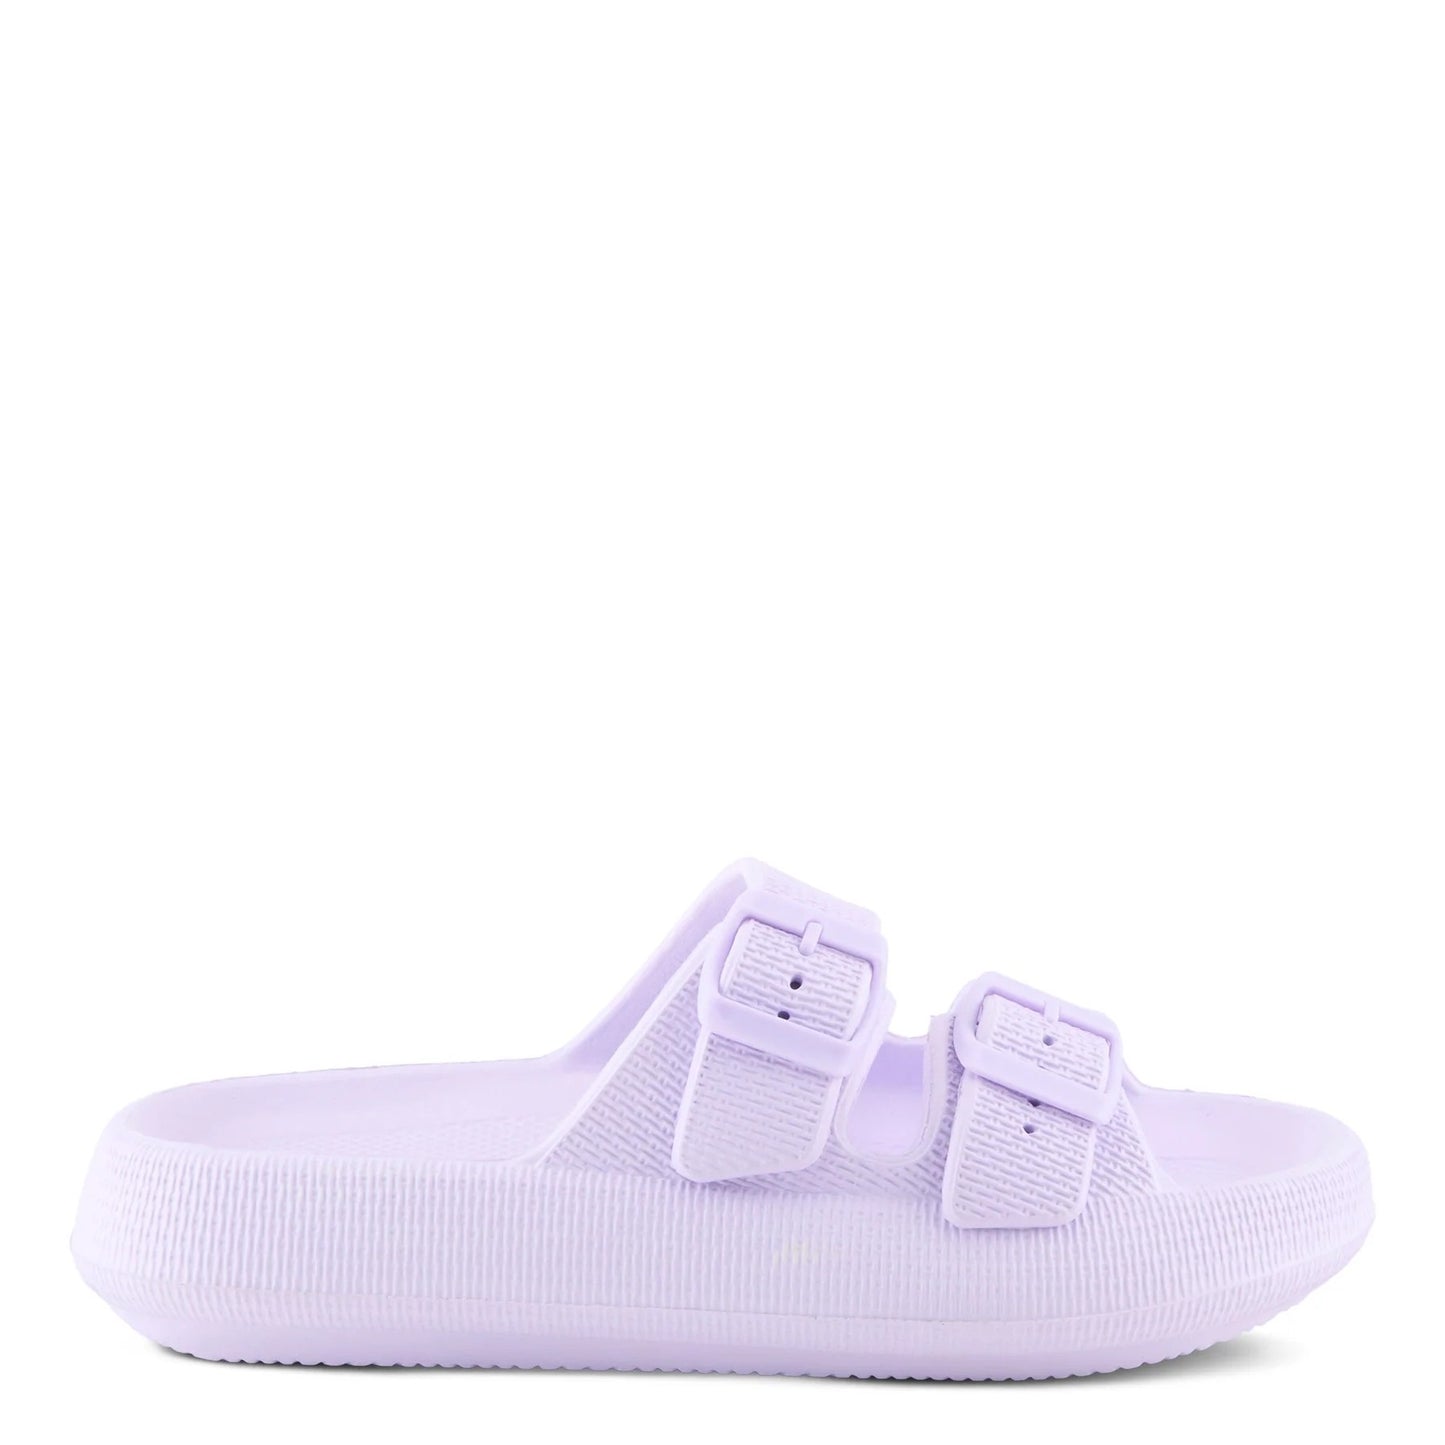 Flexus - Bubbles - Lilac - Waterproof Sandal